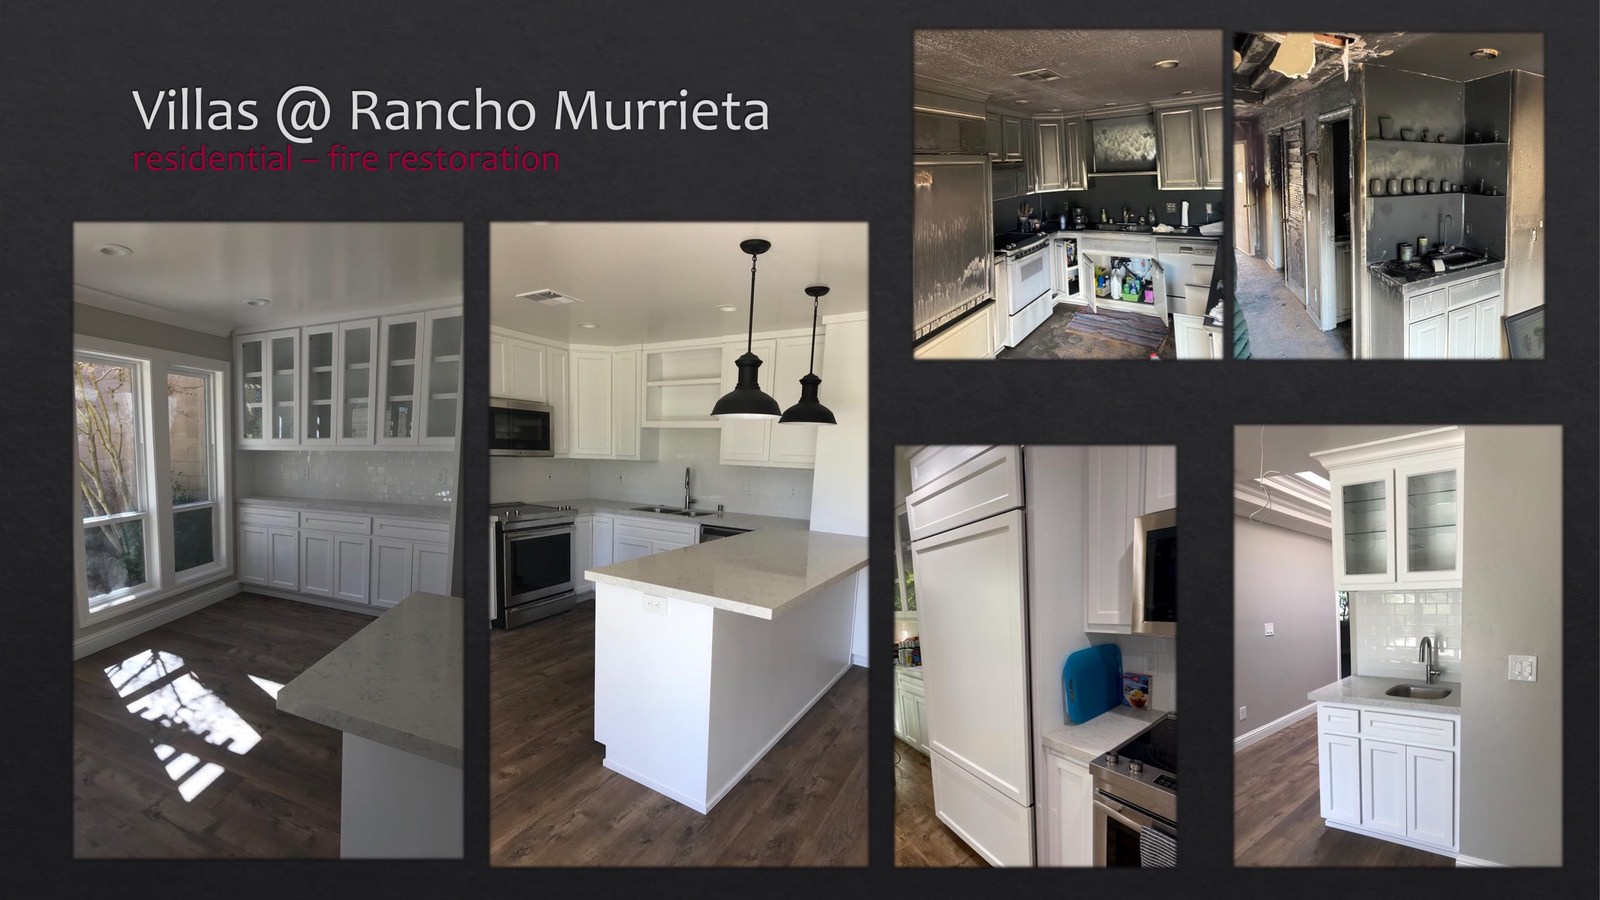 Rancho Murrieta Villas Residential fire restoration - kitchen - lightbox